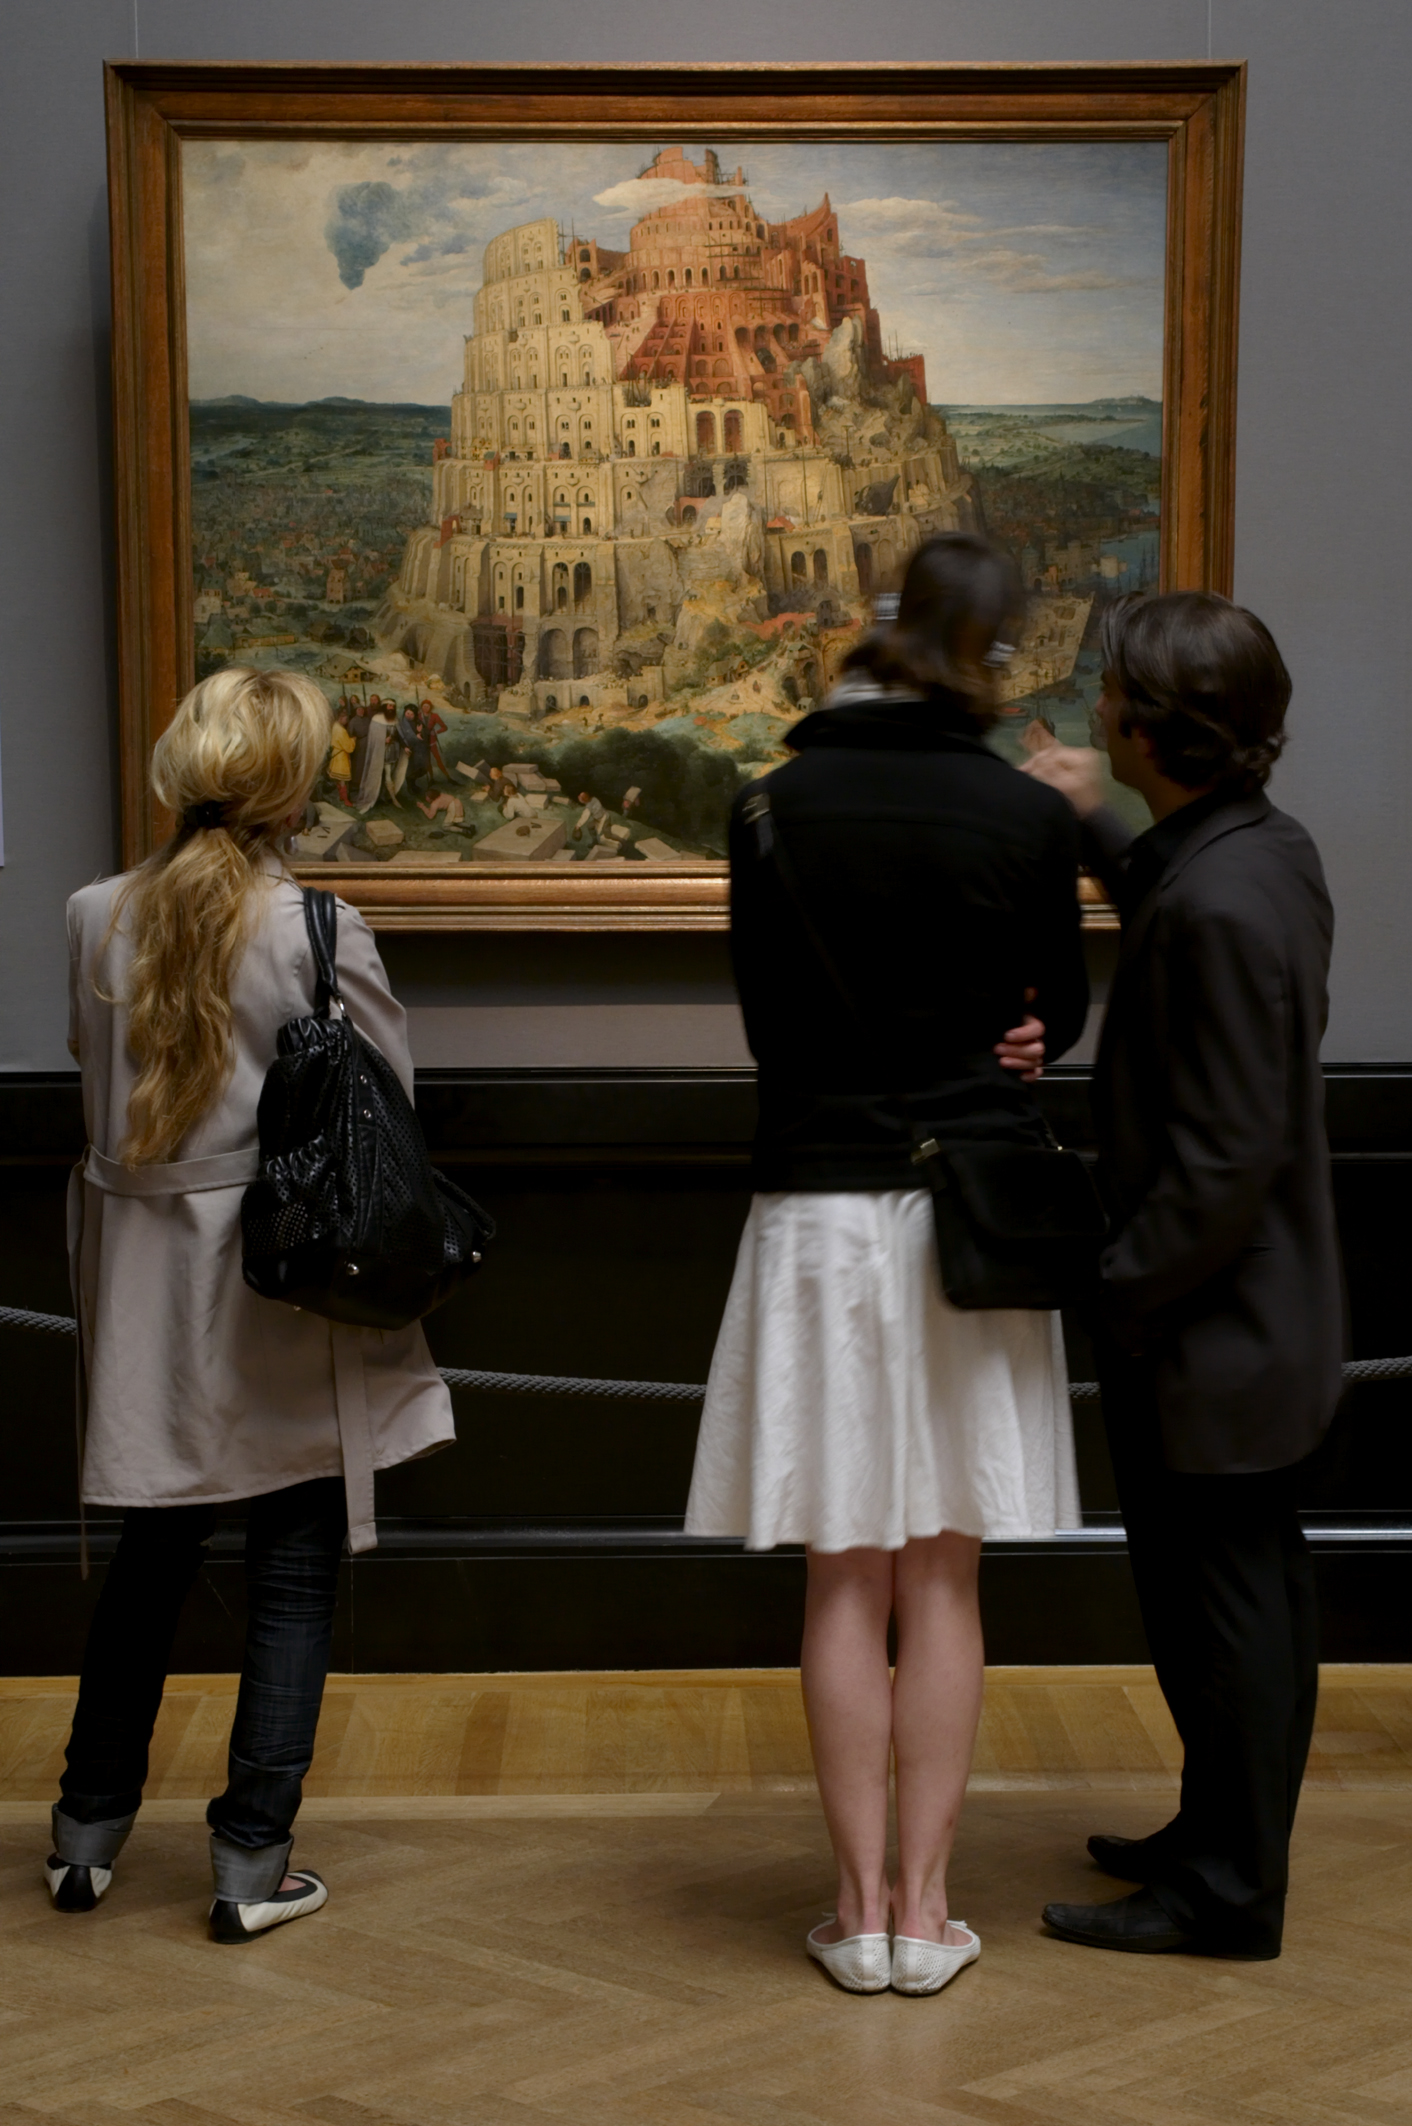 The Tower of Babel by Pieter Bruegel the Elder © KHM 